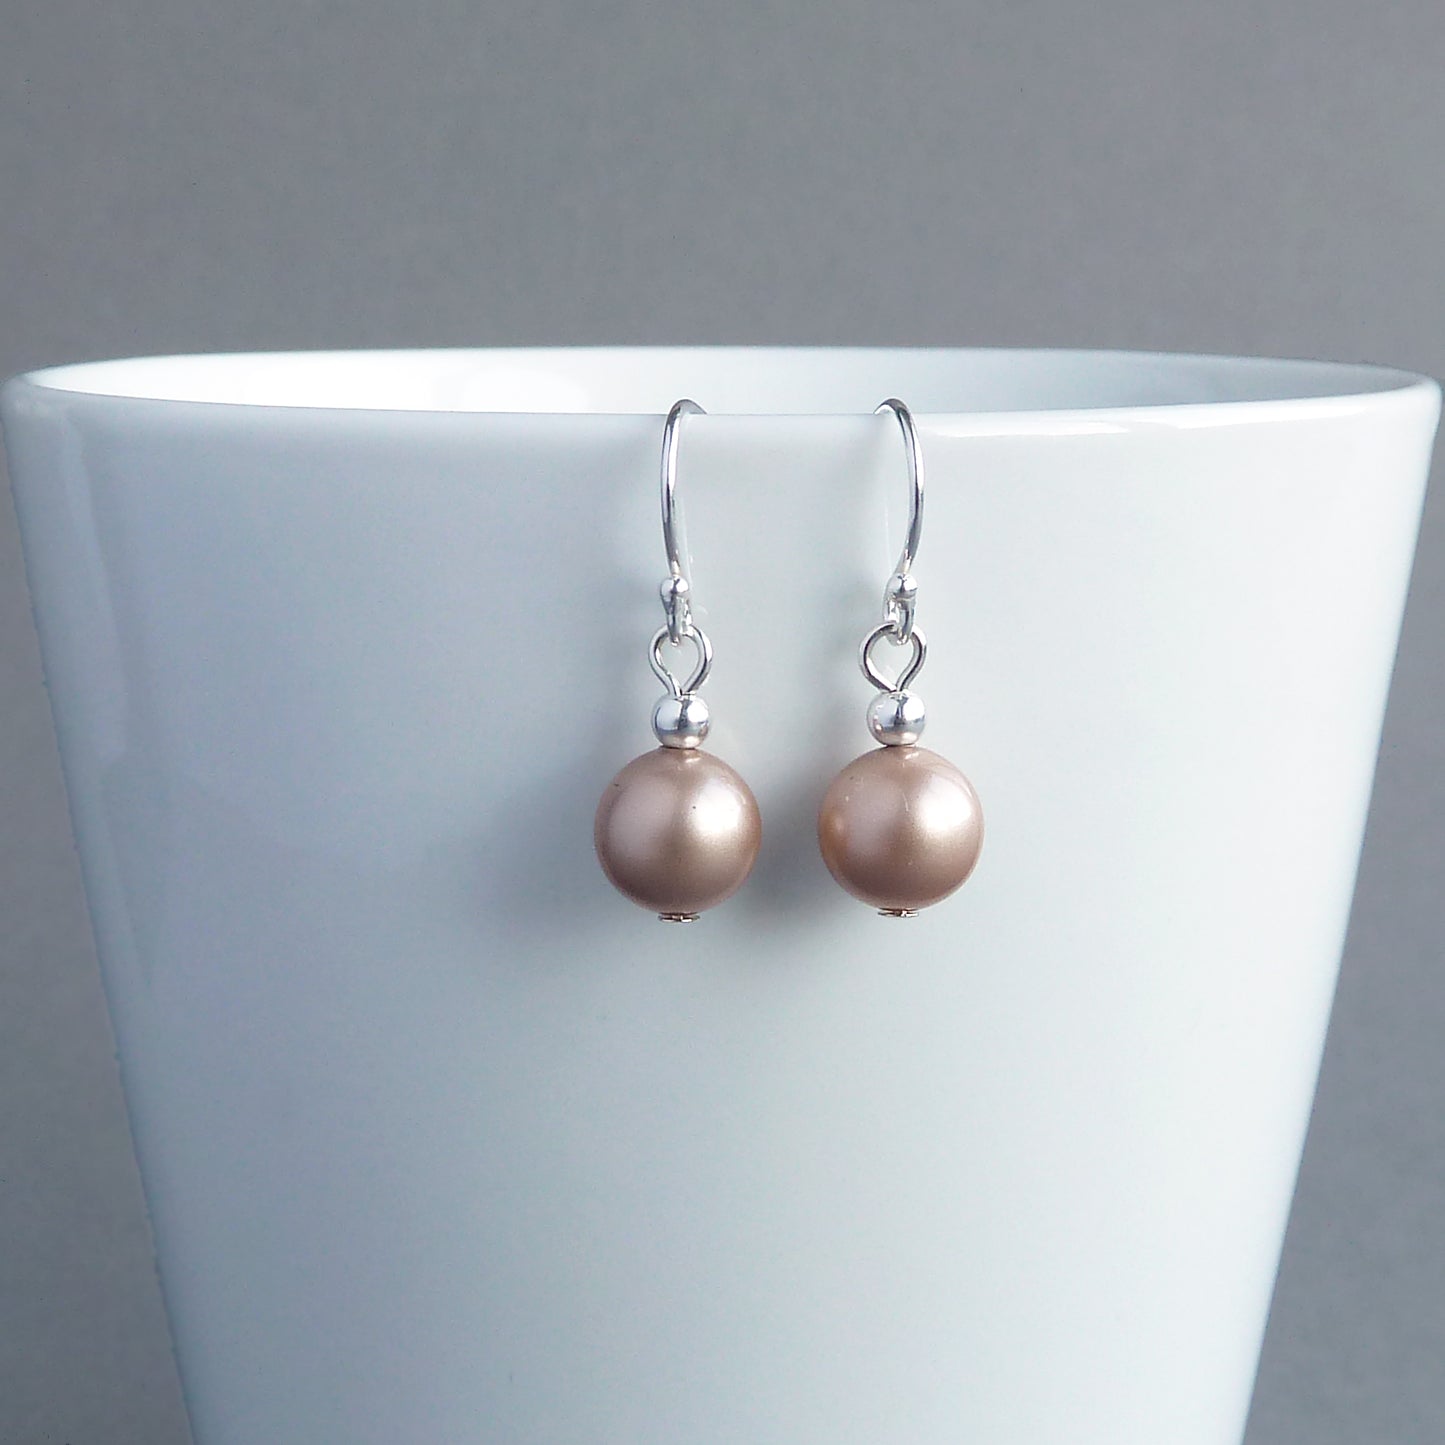 Simple champagne pearl drop earrings